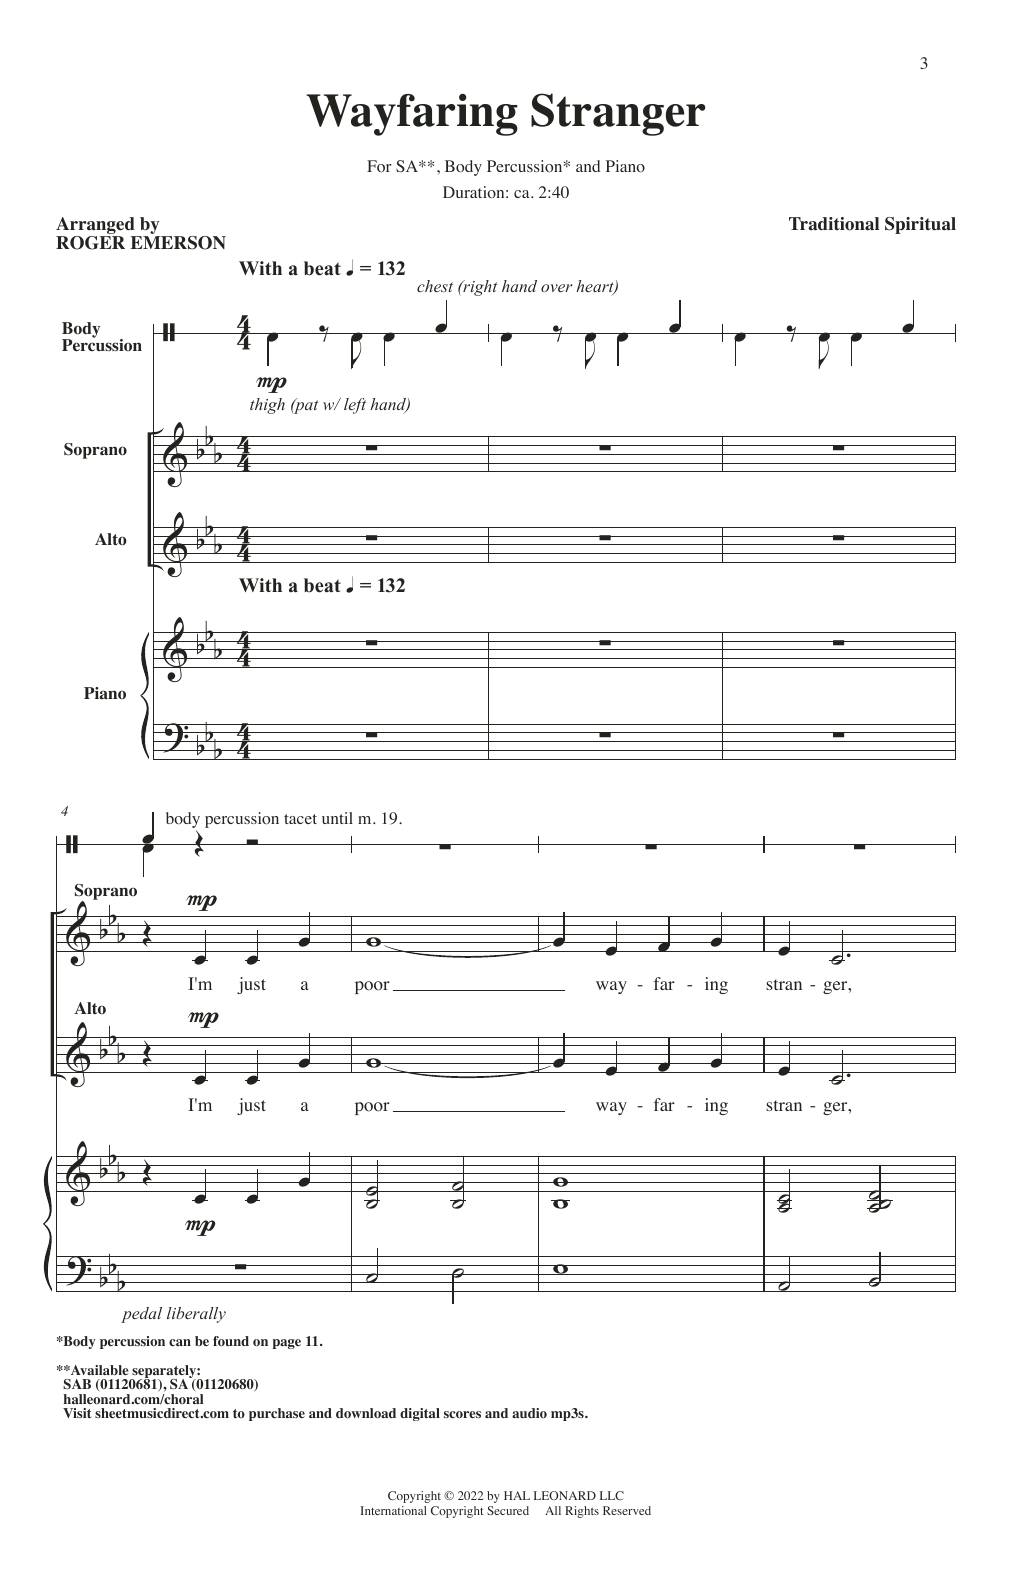 Traditional Spiritual Wayfaring Stranger (arr. Roger Emerson) sheet music notes and chords arranged for SAB Choir